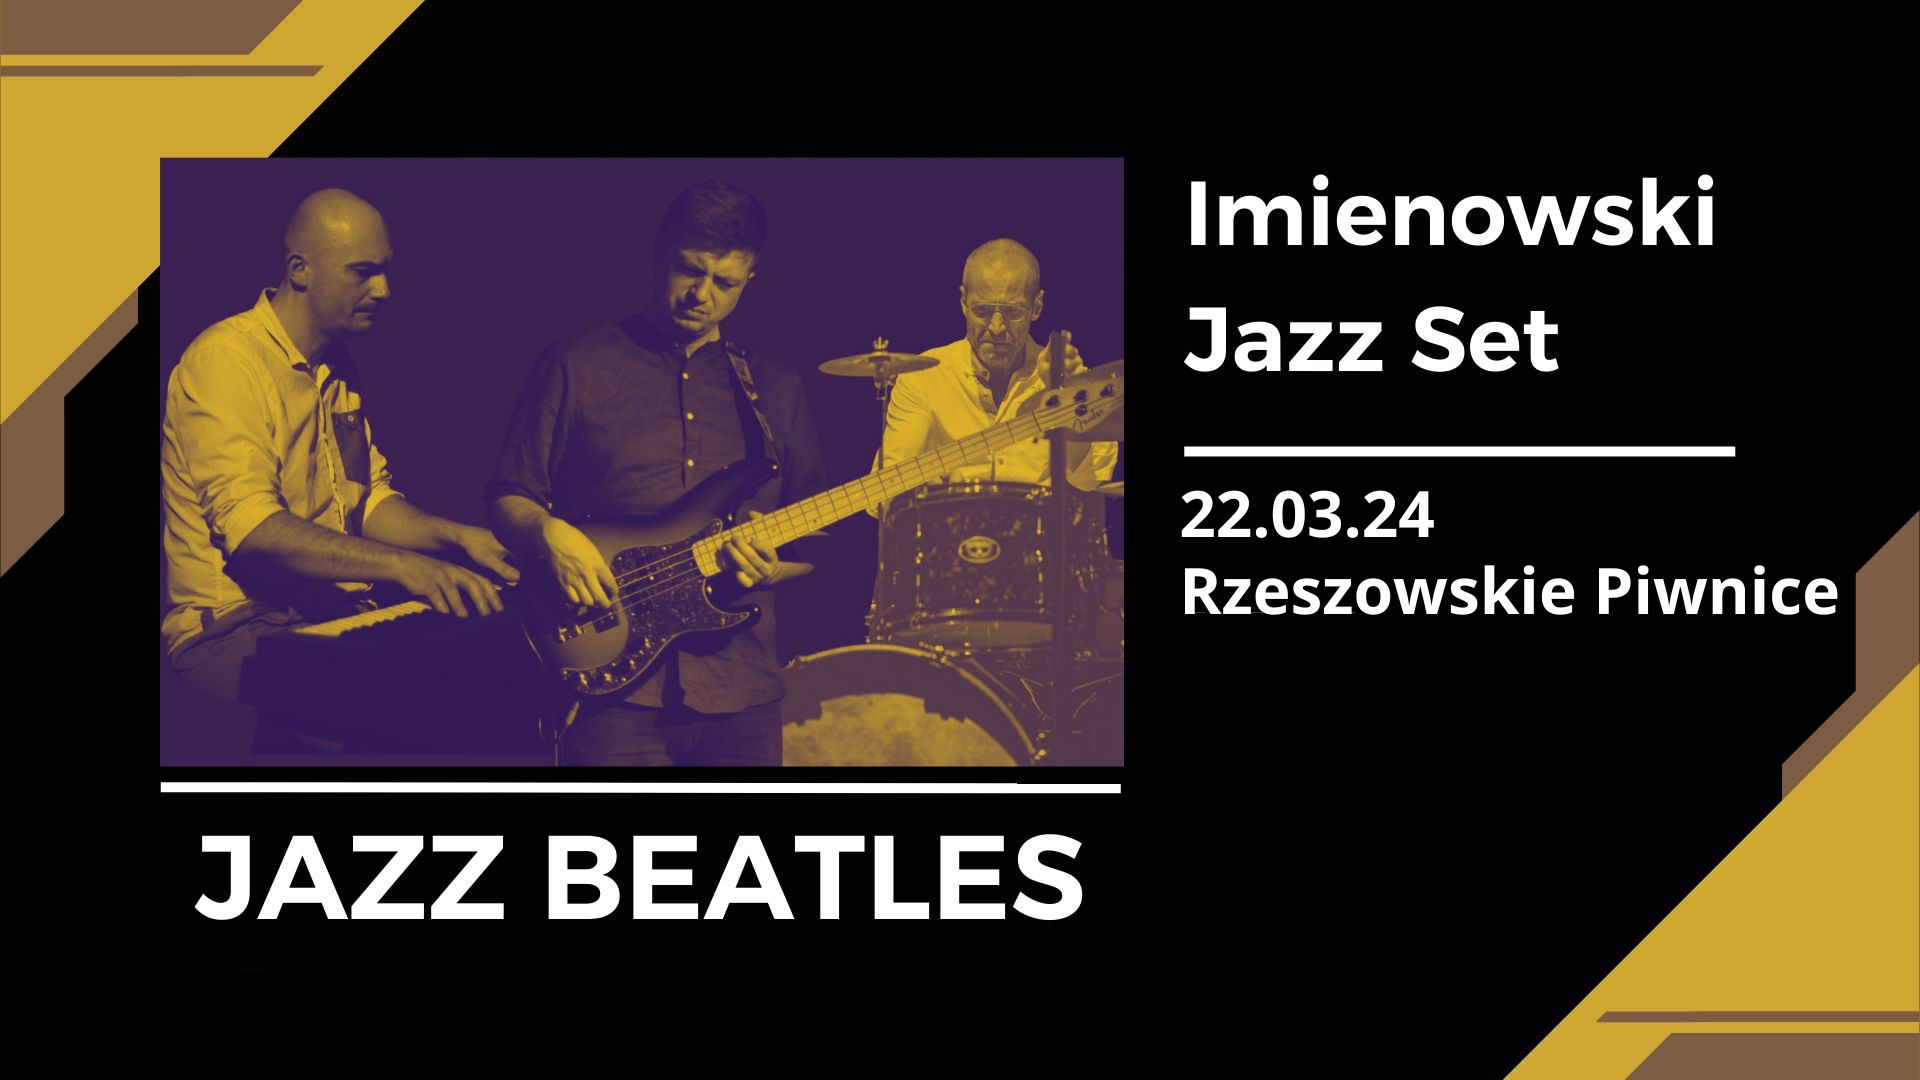 JAZZ Beatles l Imienowski Jazz Set